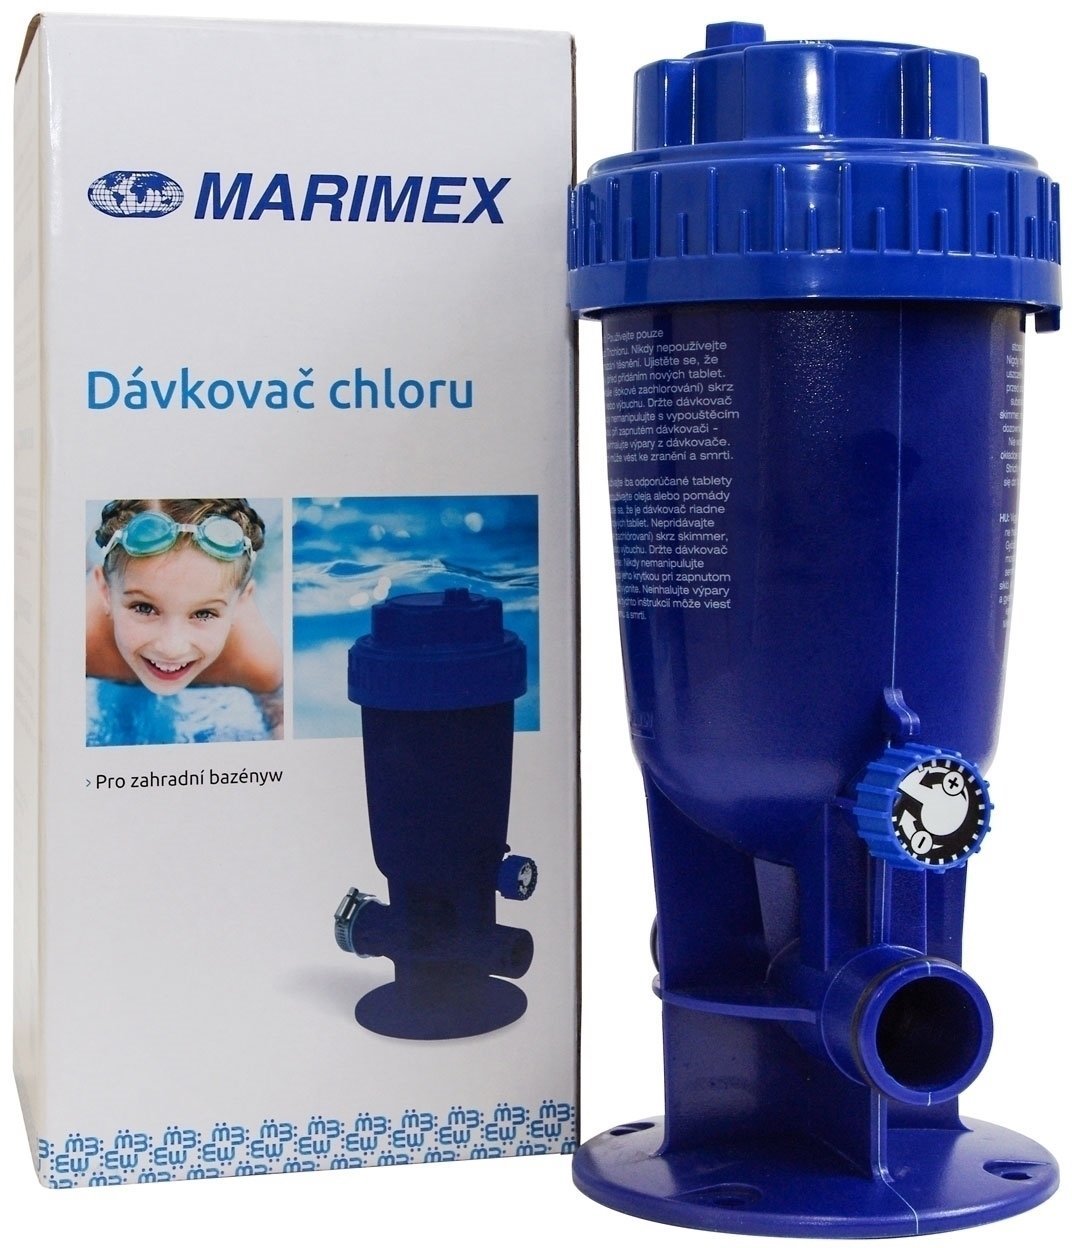 Pool Chemicals Marimex Chlorine dispenser